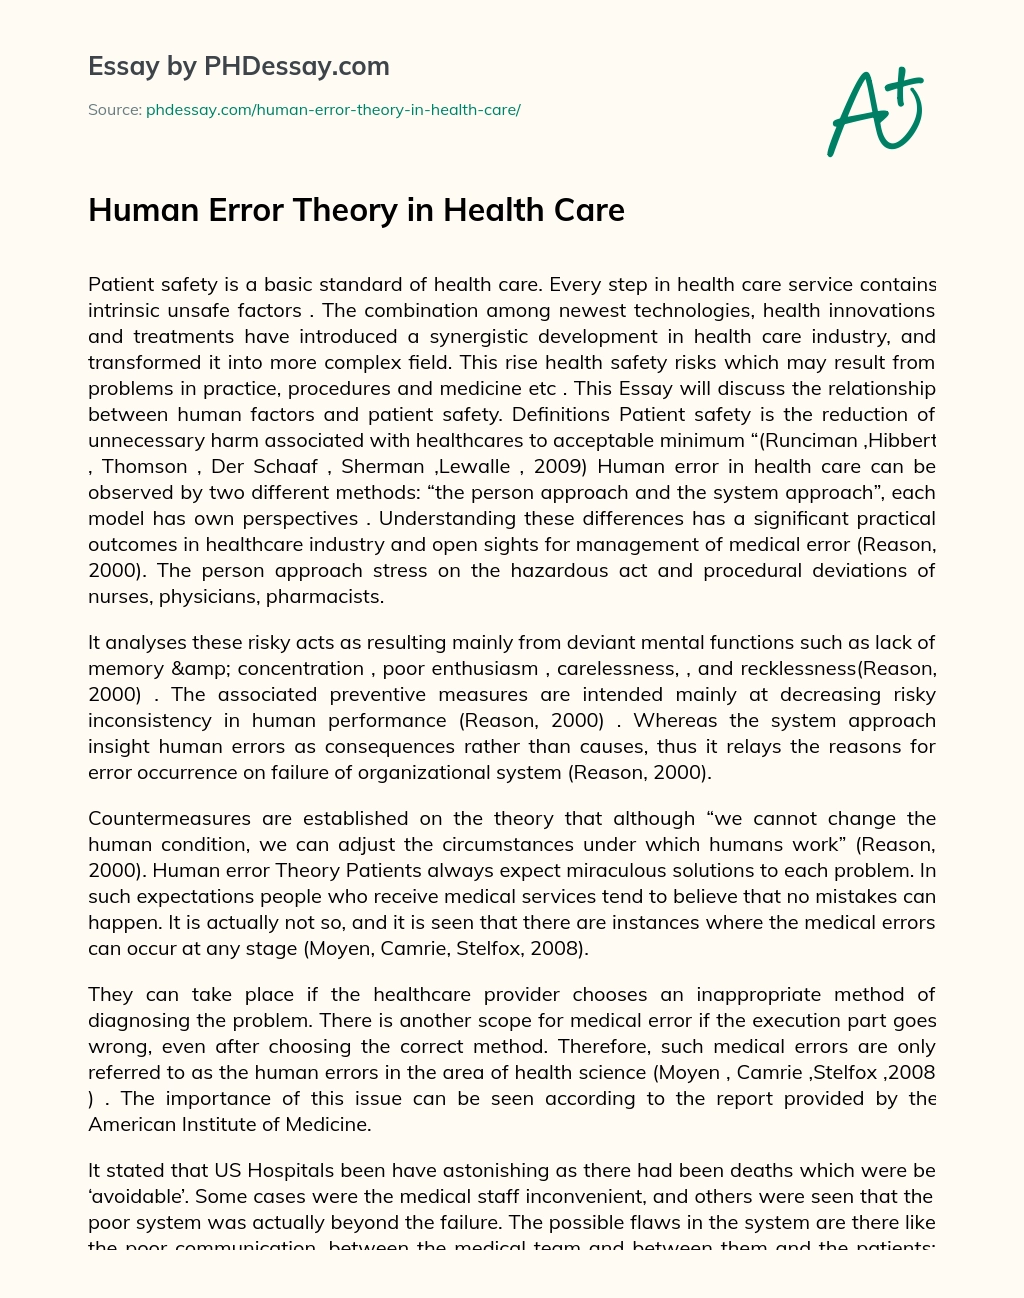 Human Error Theory in Health Care essay